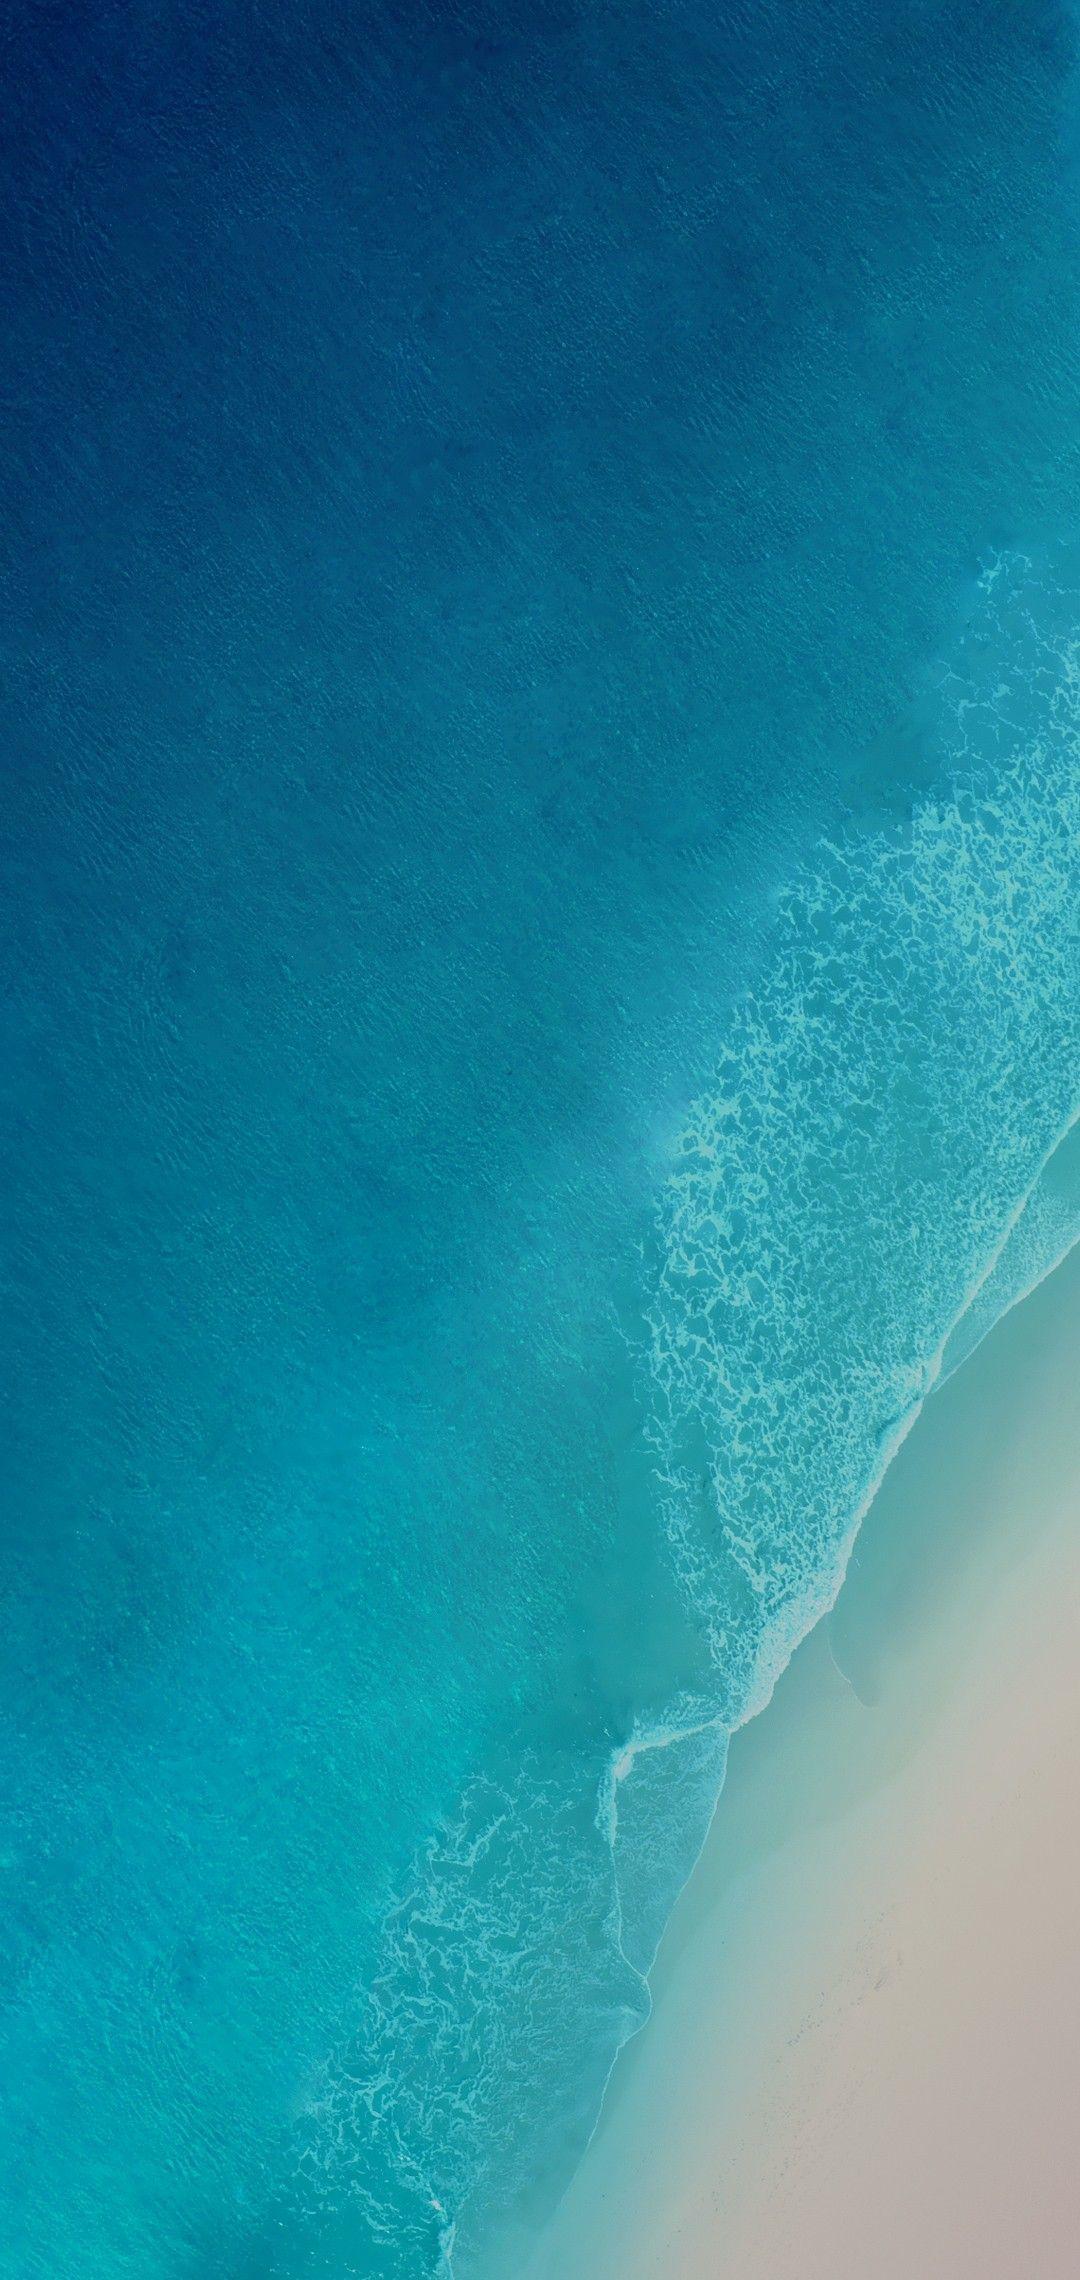 iOS 12, iPhone X, Aqua, blue, Water, ocean, apple, wallpapers